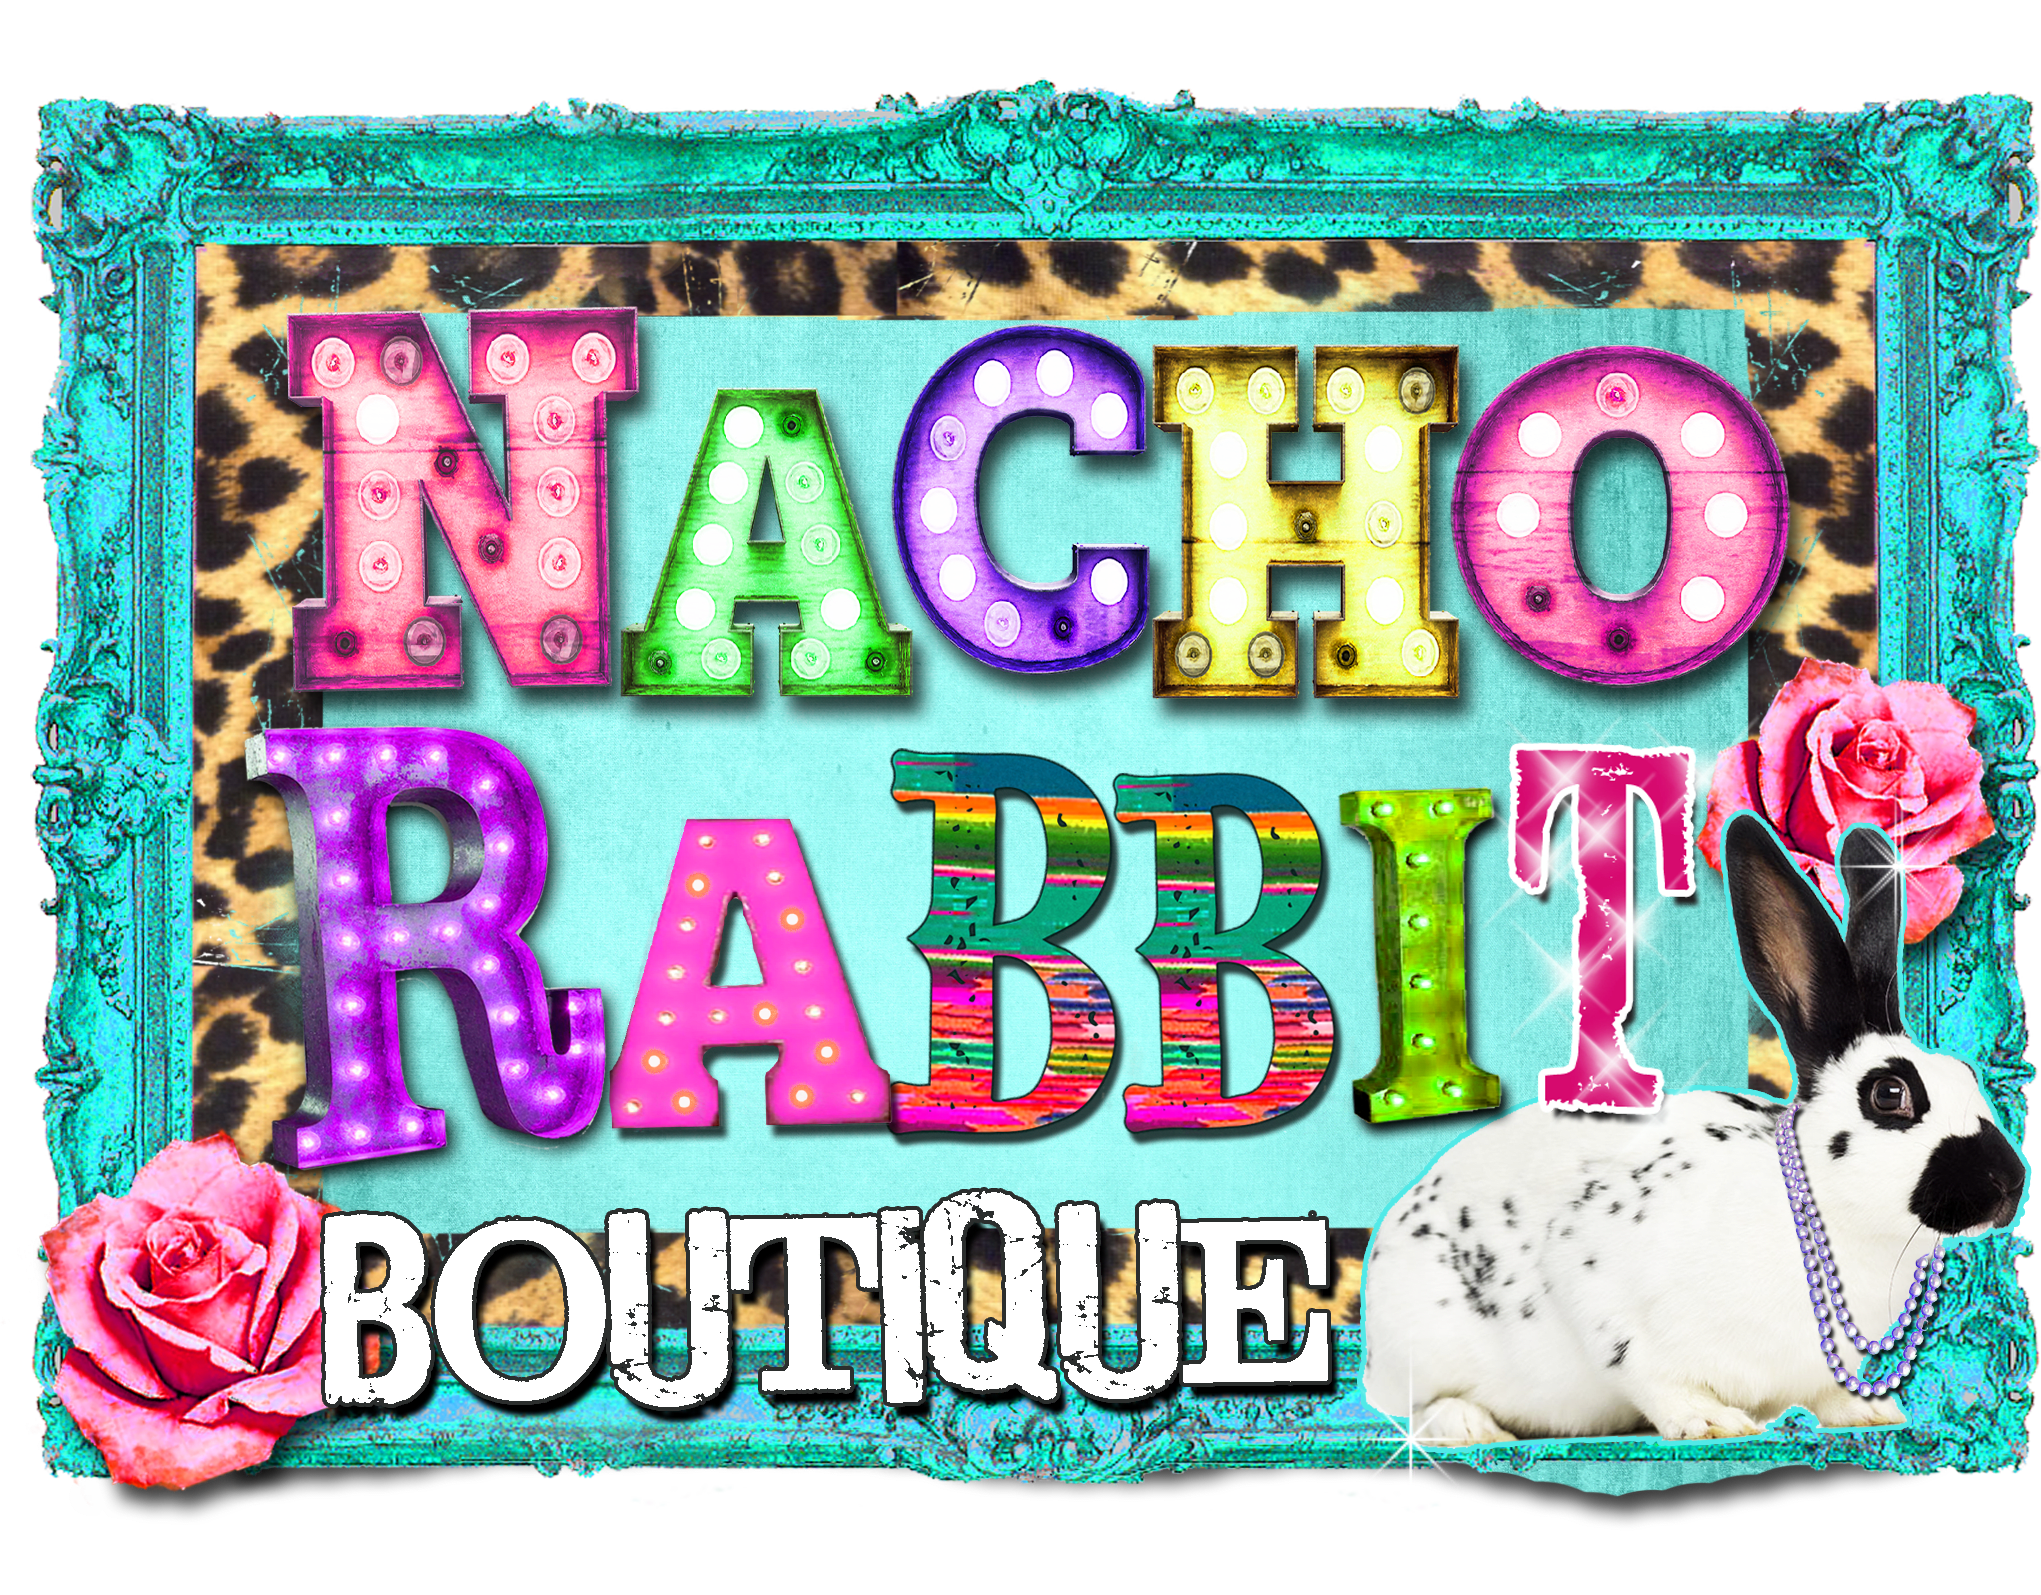 Nacho Rabbit Boutique